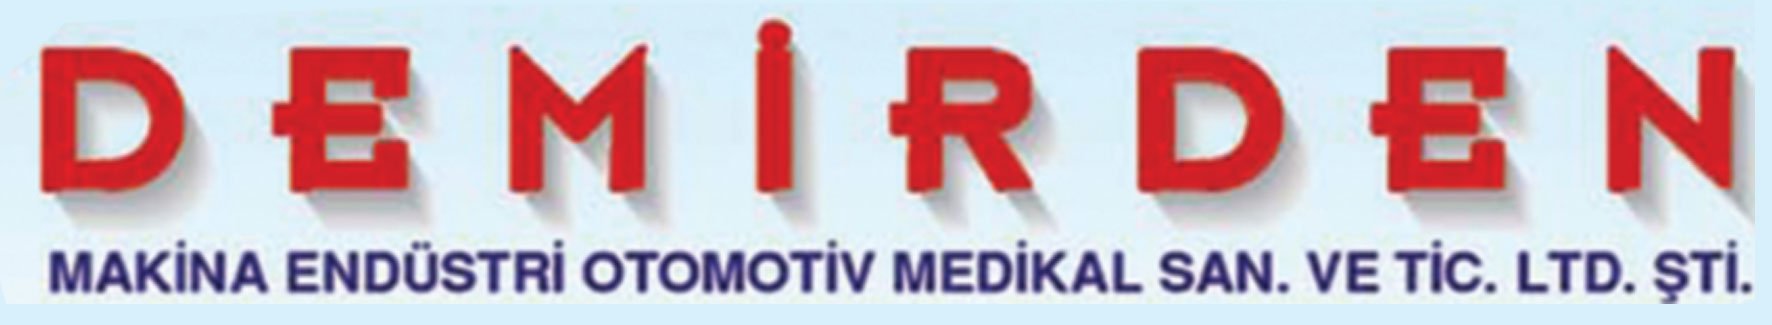 Demirden Makina Endüstri Otomotiv Medikal San. Ve Tic.Ltd. Şti.